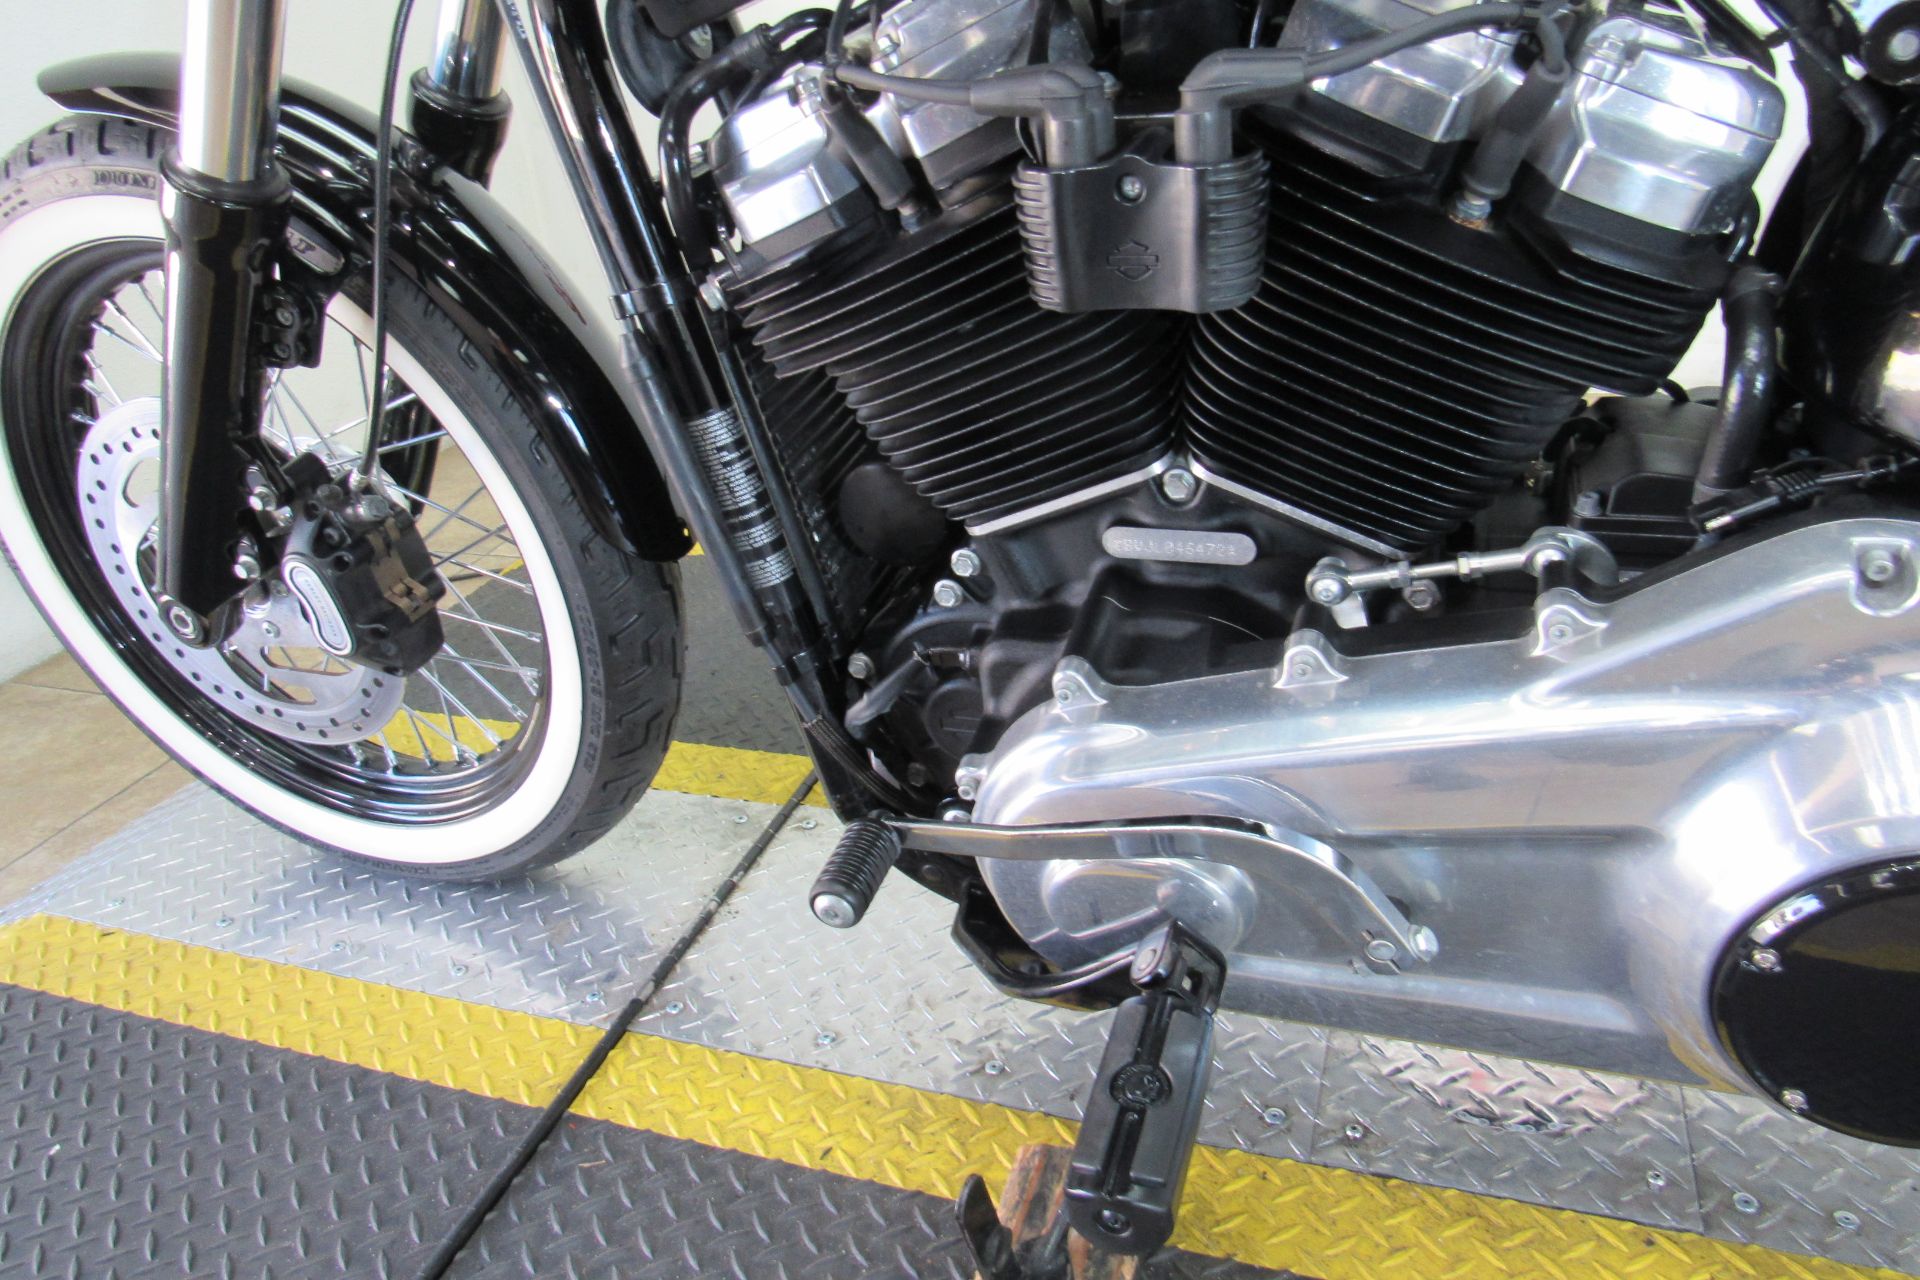 2020 Harley-Davidson Softail® Standard in Temecula, California - Photo 16